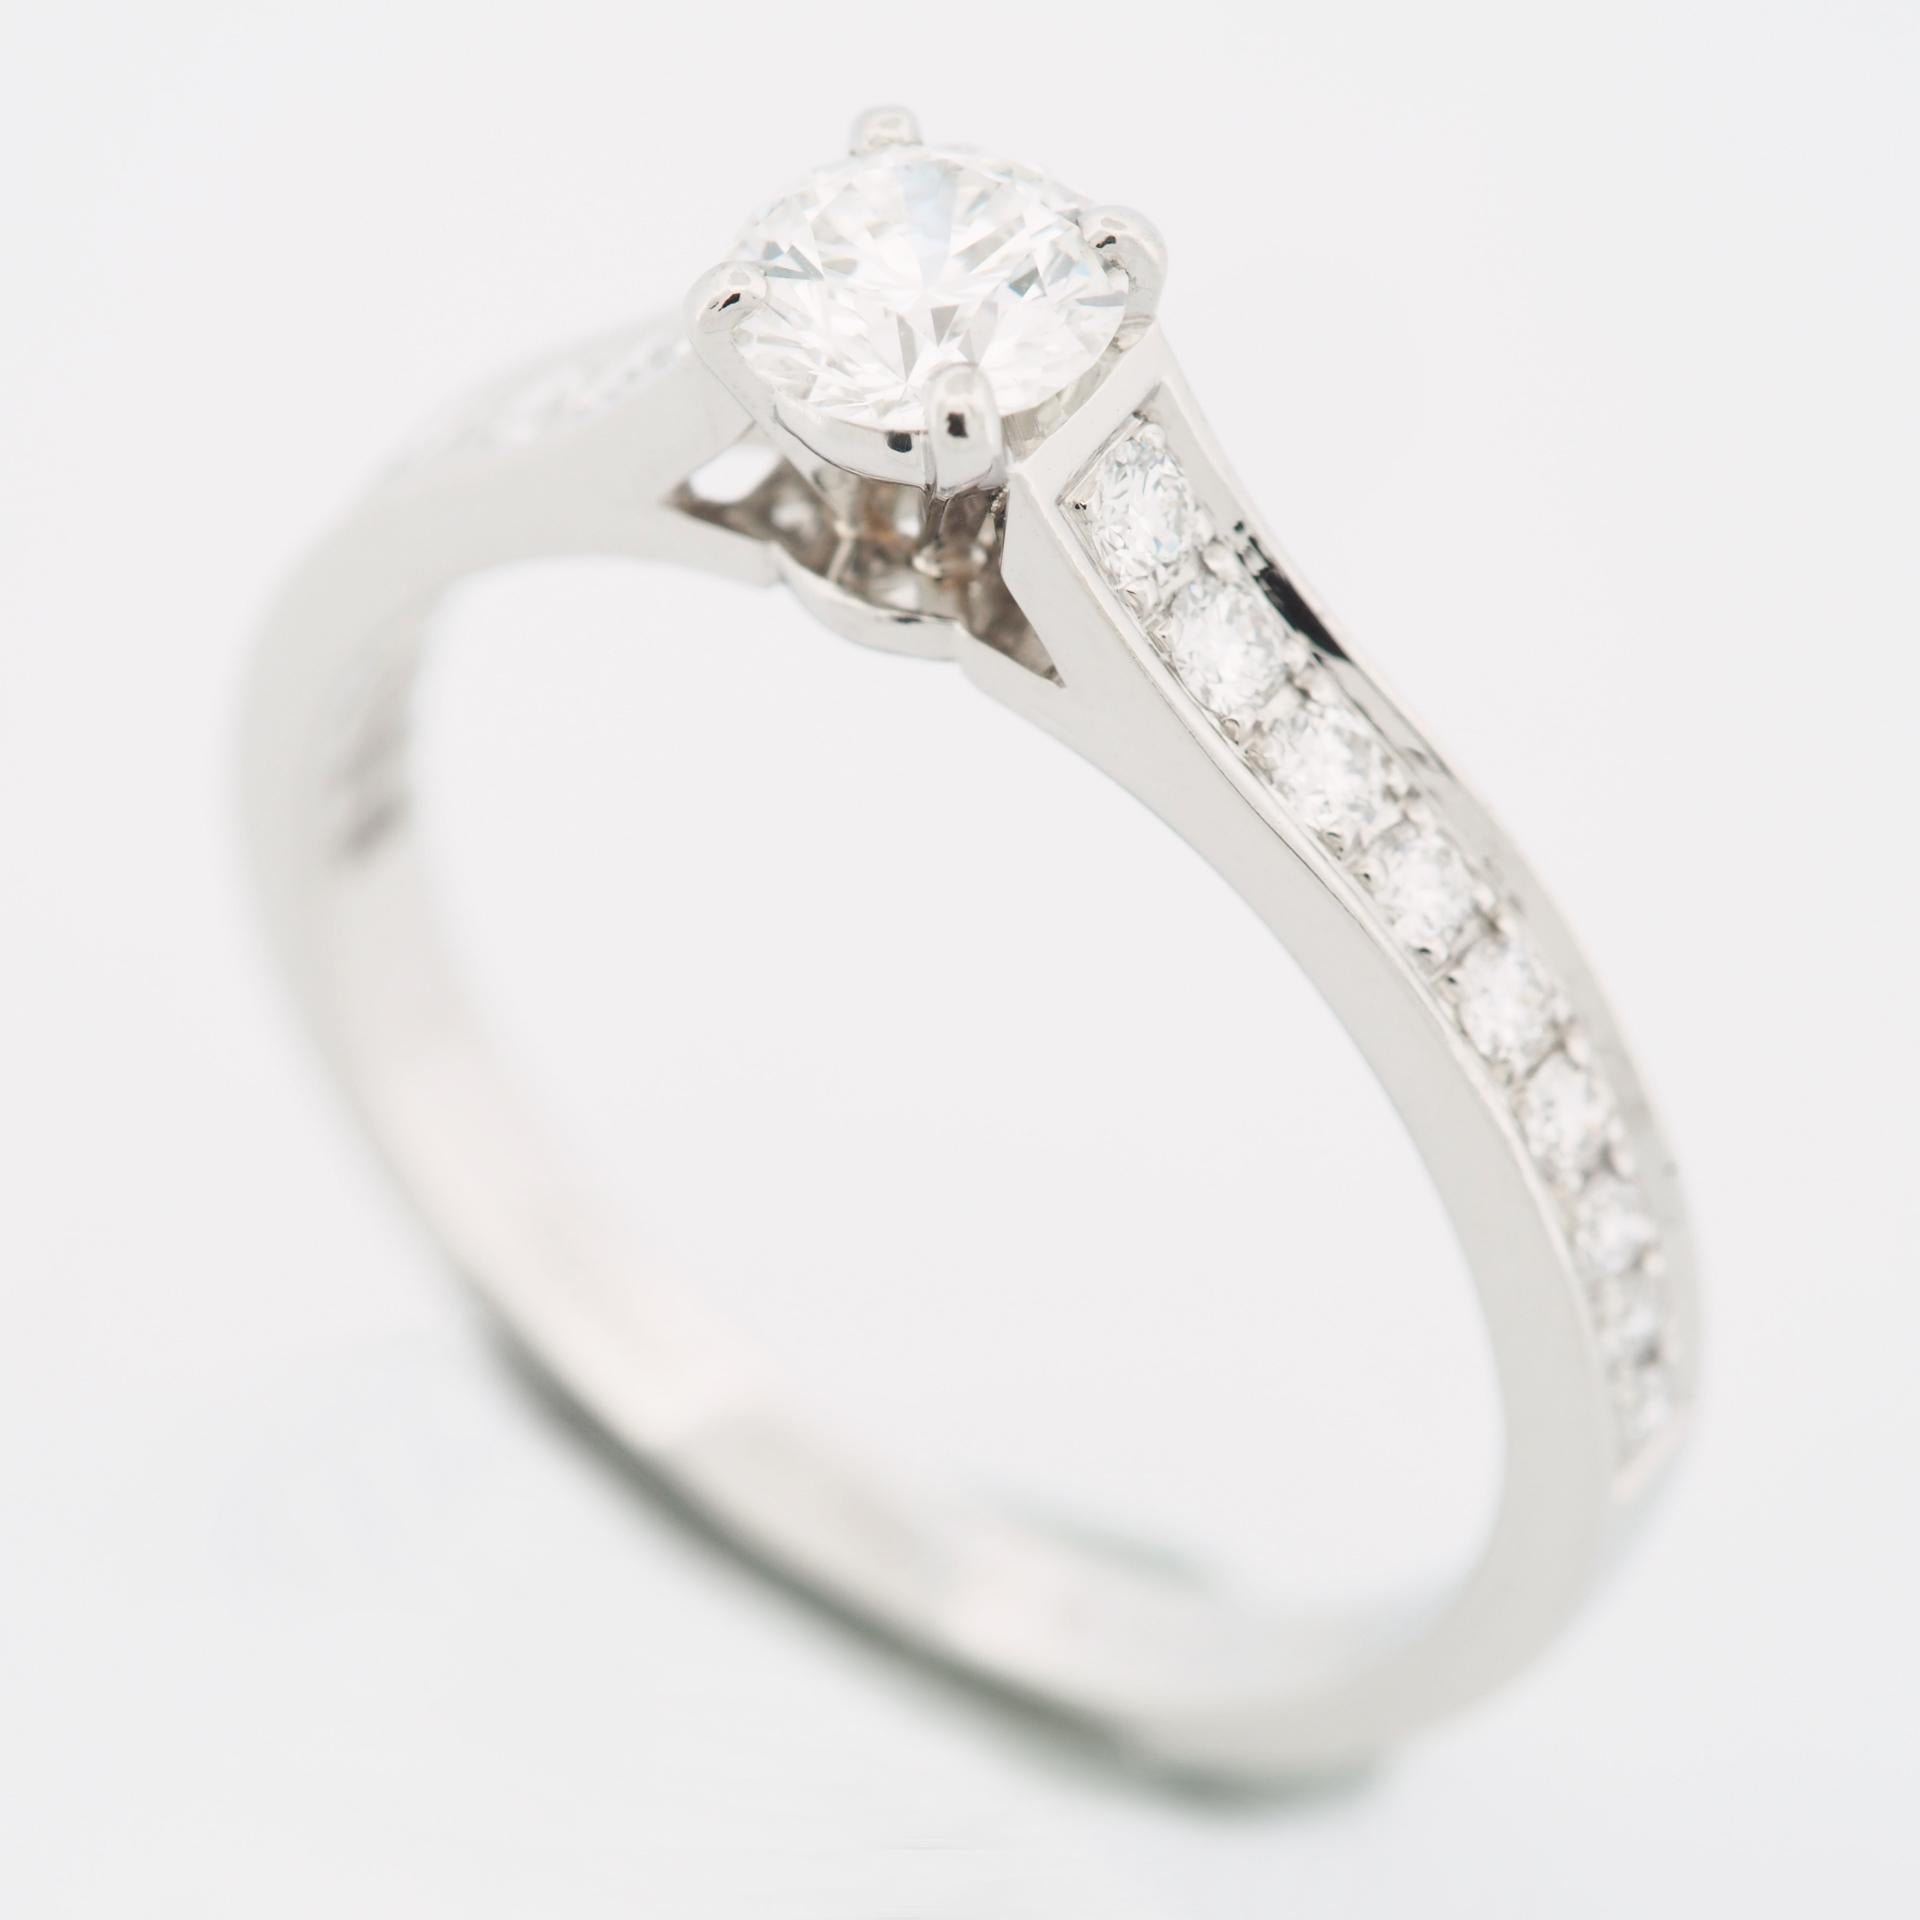 Item: Authentic Cartier 1895 Diamond Solitaire Ring
Stones: Diamond ( center stone 0.32 ct ) with 18 pave diamonds
Color: G
Clarity: VVS1
Polish: Excellent 
Symmetry: Excellent
Fluorescence: None
Metal: Platinum 950
Ring Size: 50 US SIZE 5.25 UK